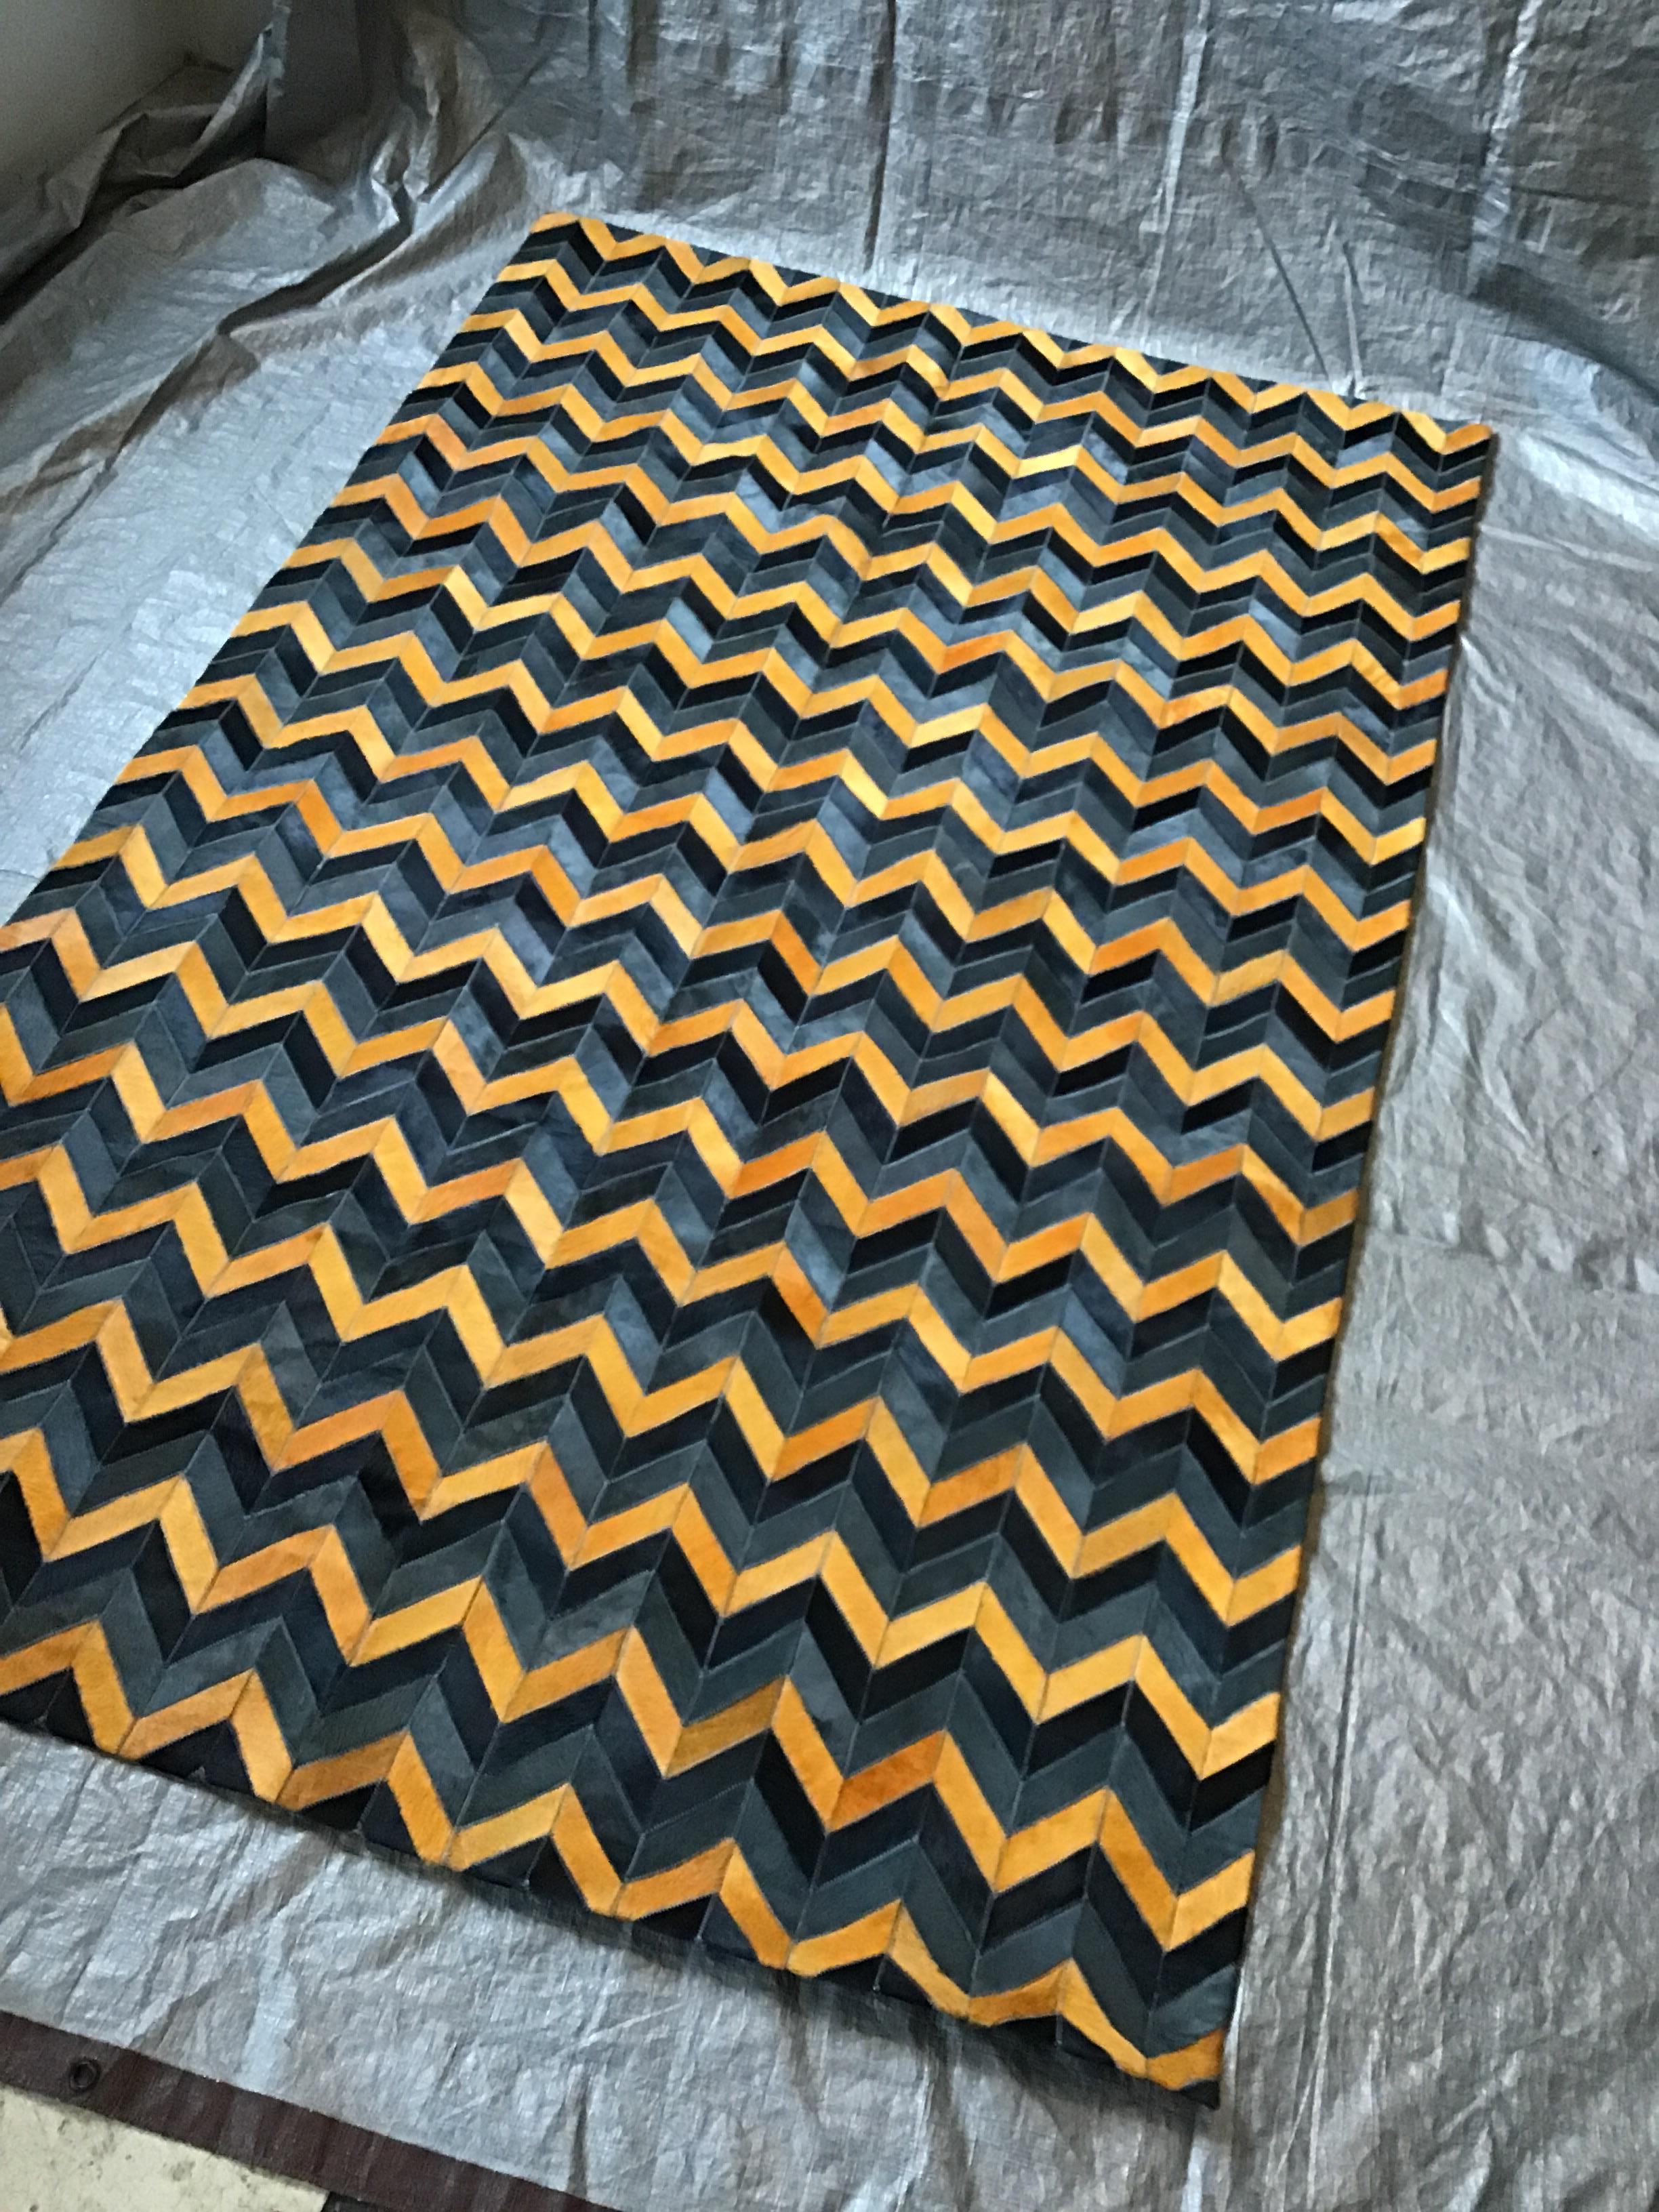 Castelluxe custom made goldenrod, black, grey, hair on hide rug. Measures: 5 x 8. Never used.